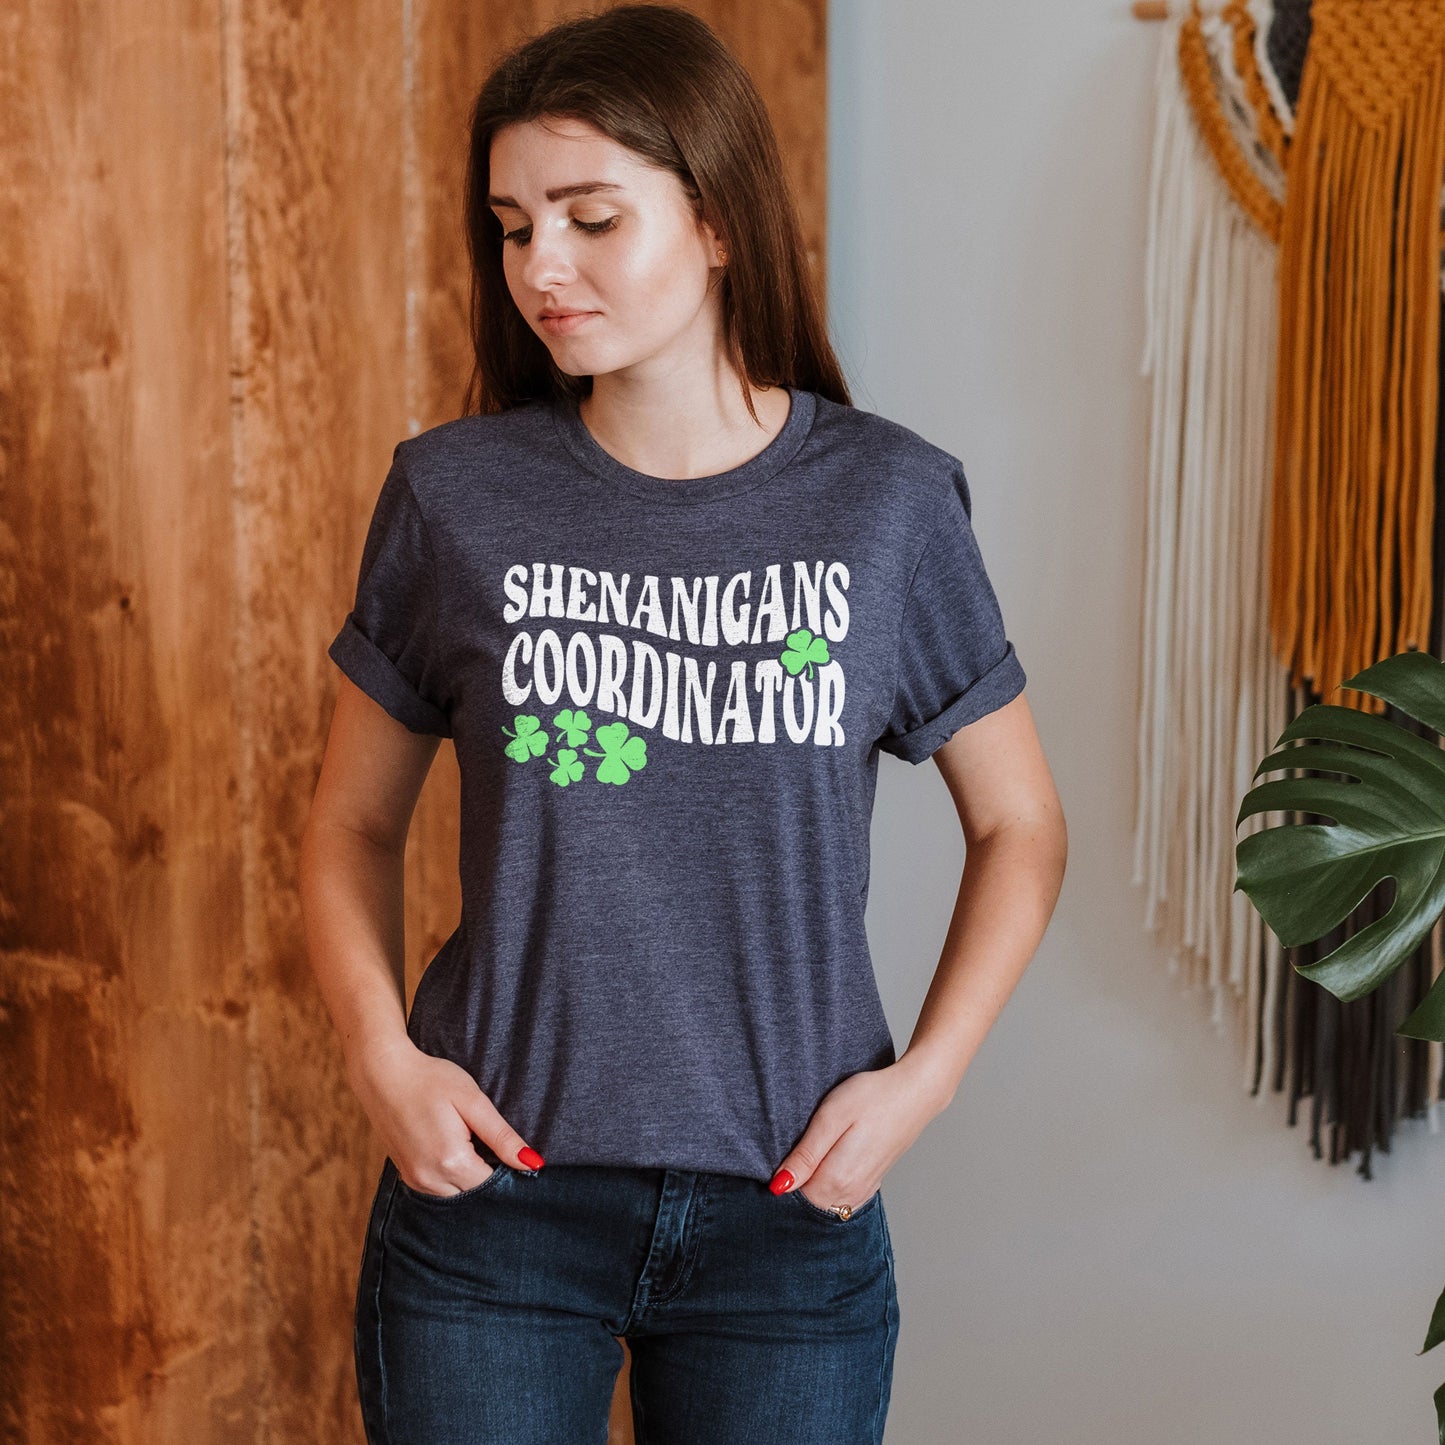 Shenanigans Coordinator Shirt, Teacher Shamrock T-Shirt, Mom Lucky T-Shirt, Irish Girl Tee, Team Shenanigans Shirt, St. Patrick's Day Shirt